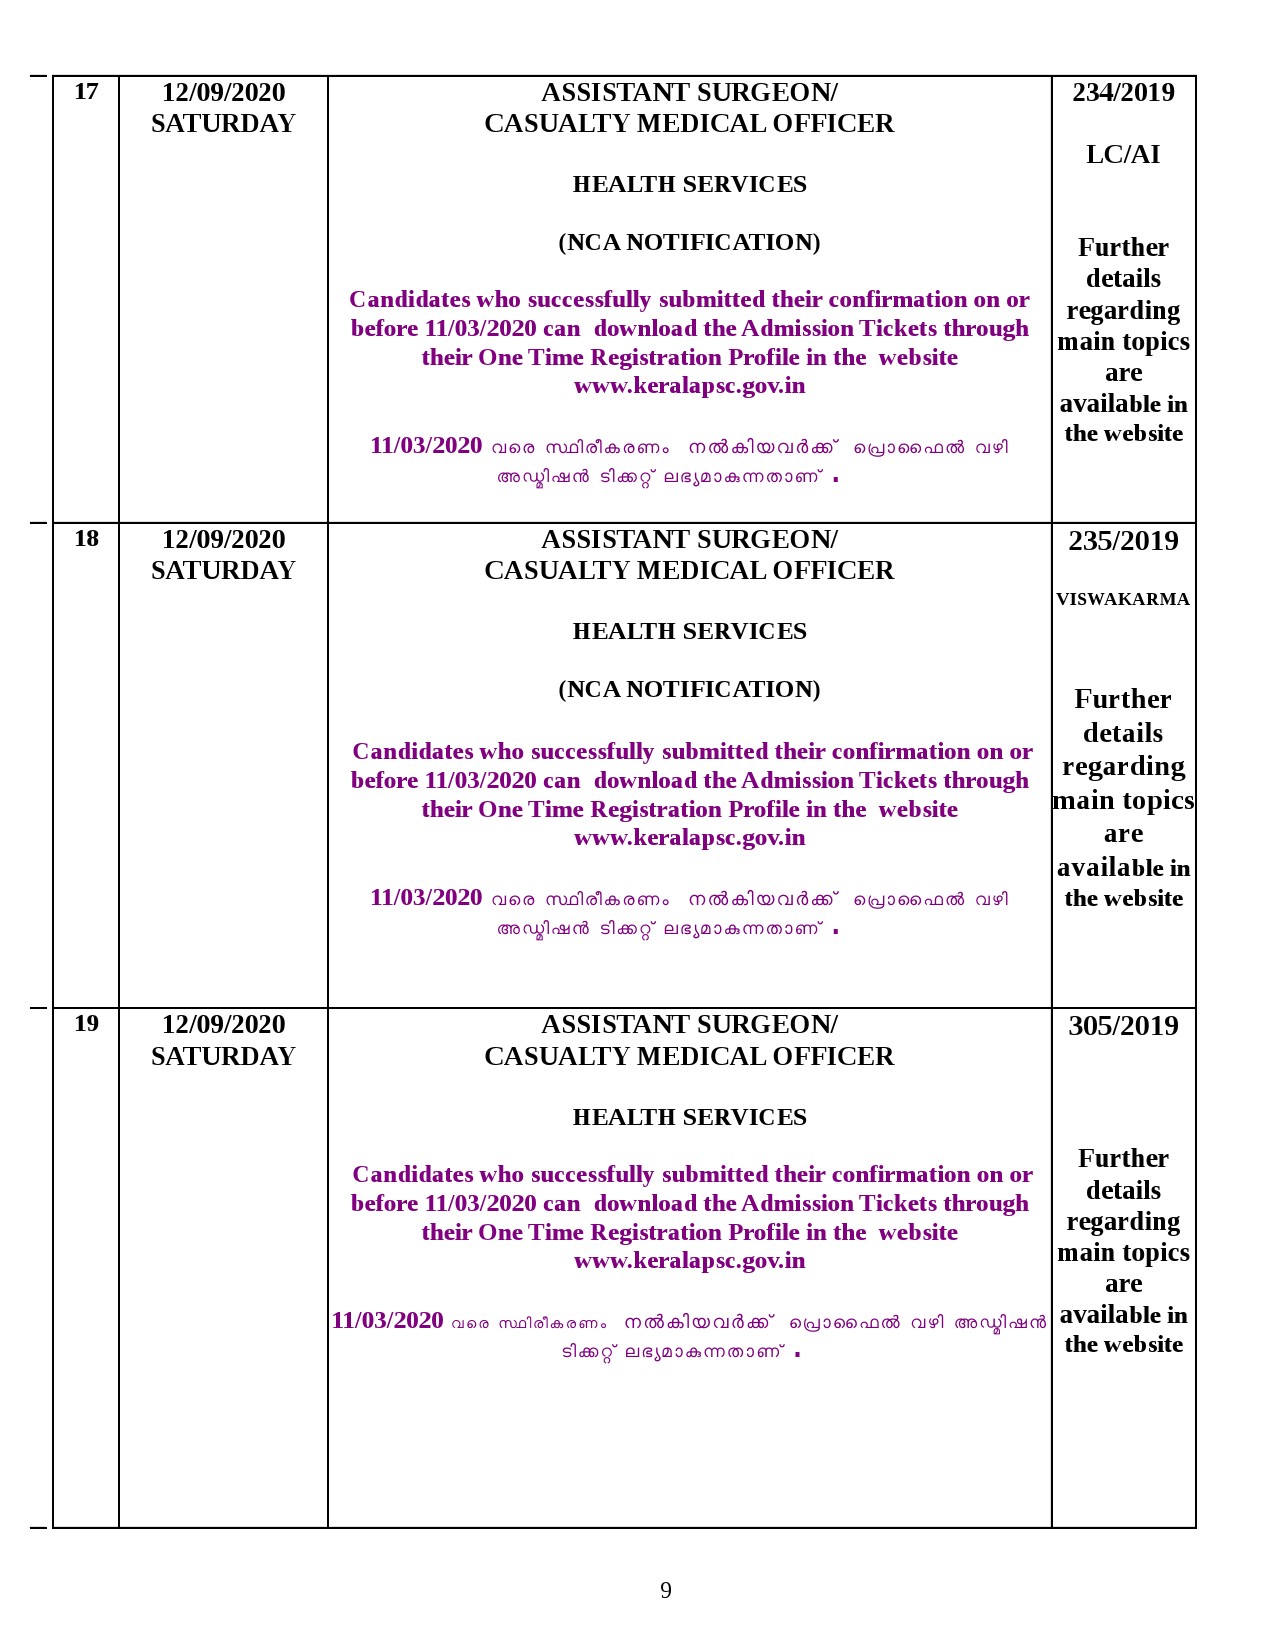 Kerala PSC Exam Calendar September 2020 - Notification Image 9